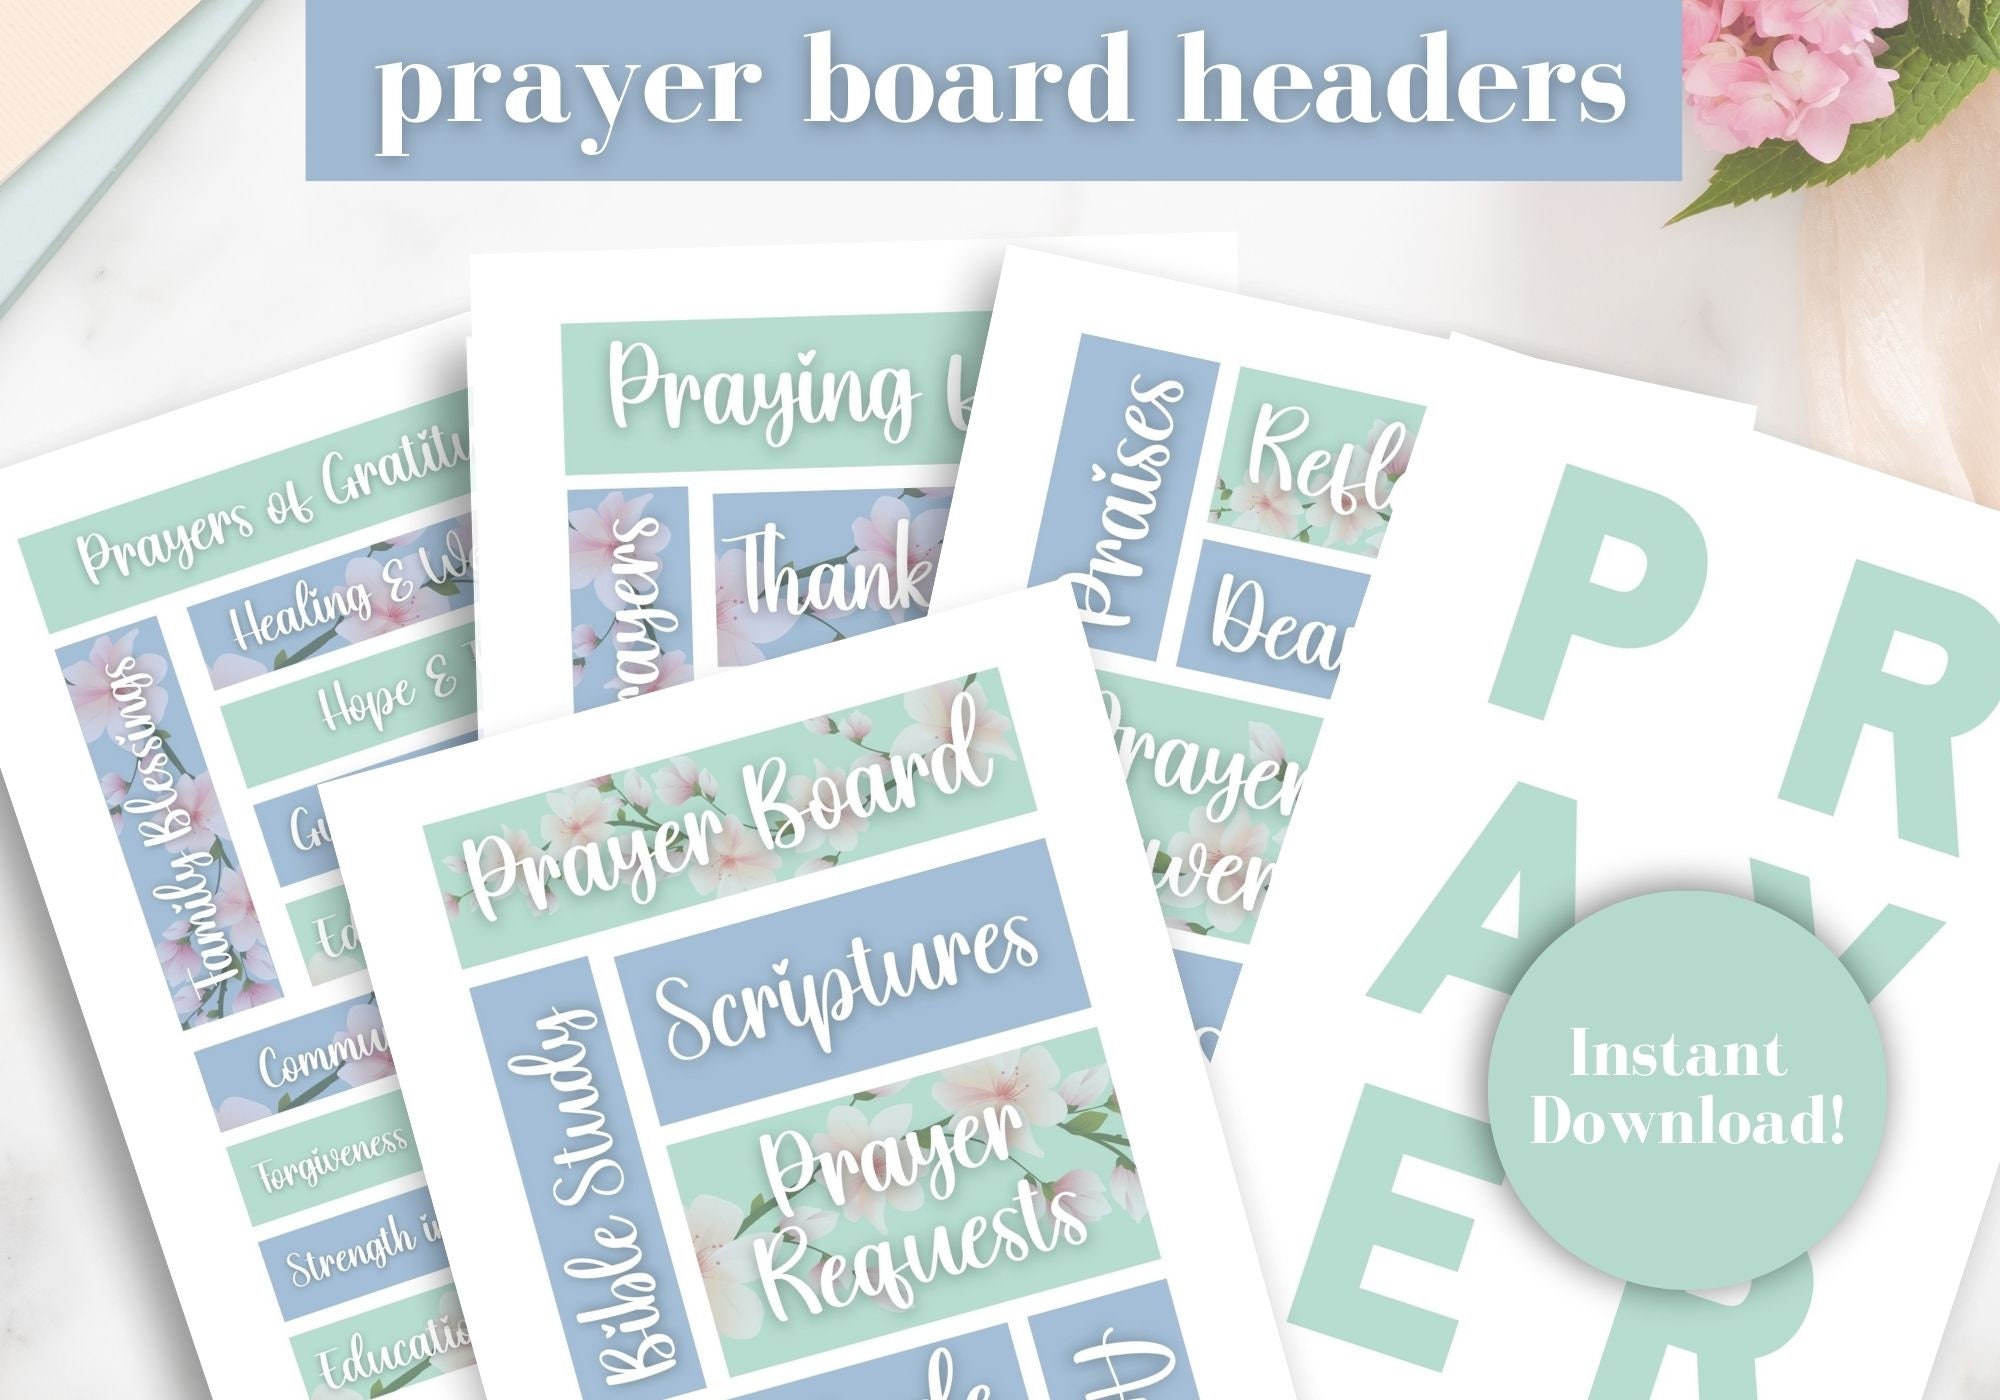 Prayer Board Kit Printable, Daily Prayer Board, Pink Prayer Board Headings  & Words, Christian Bulletin Board 